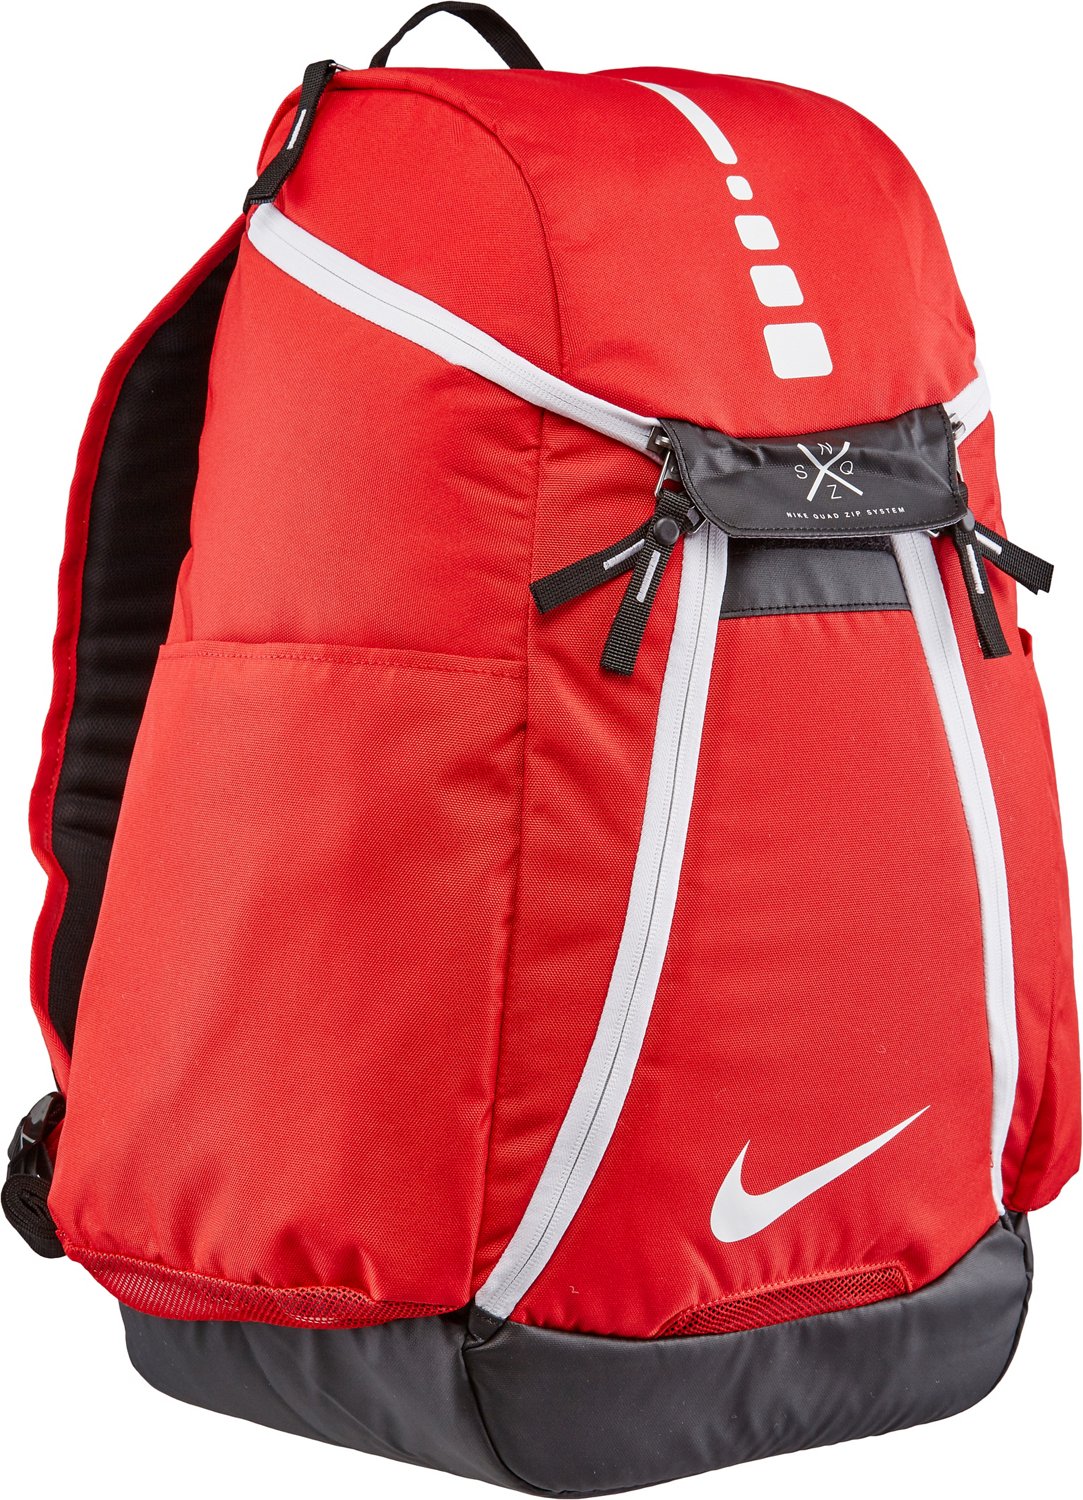 nike air max backpack red